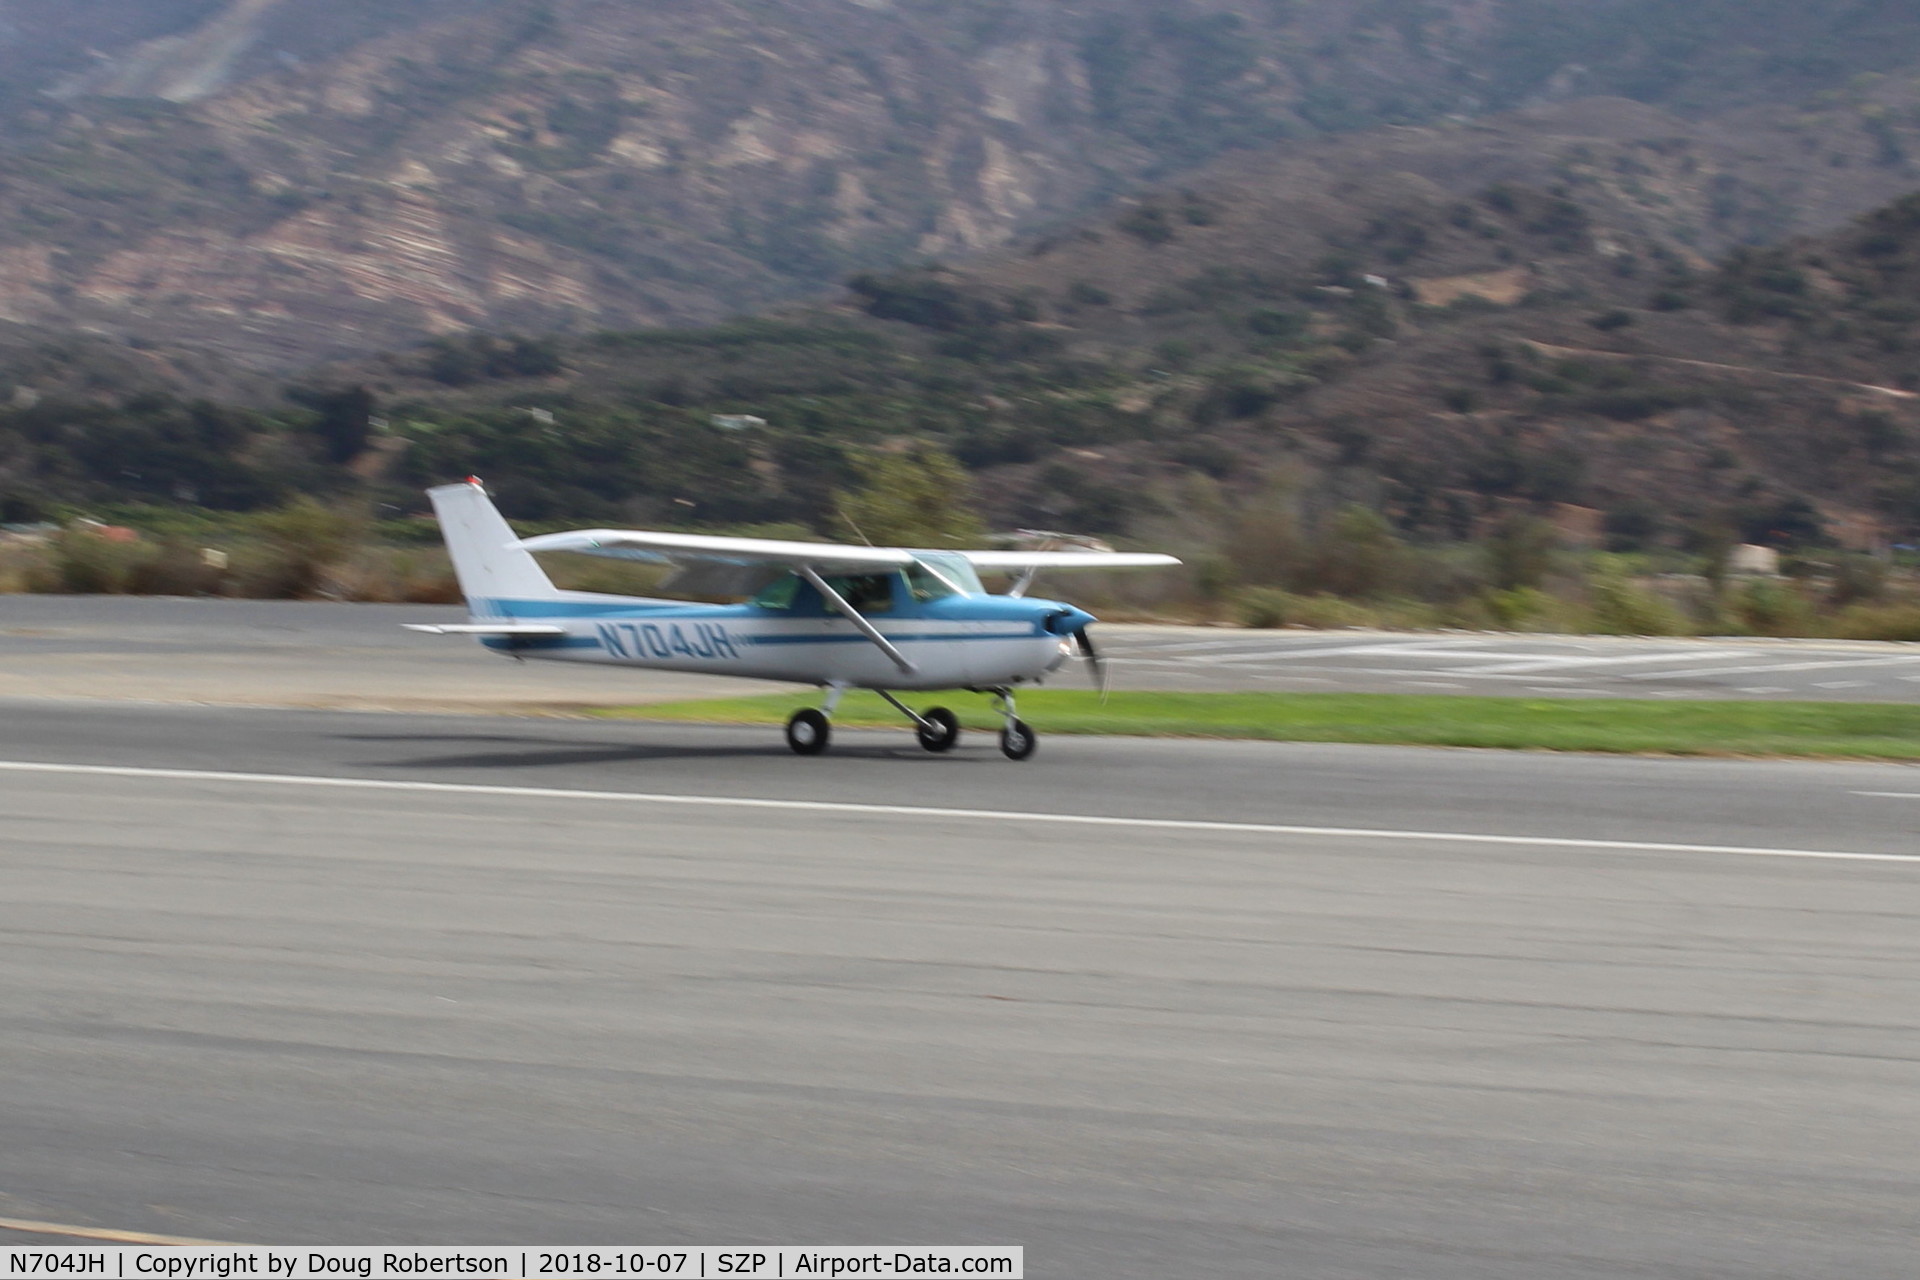 N704JH, 1976 Cessna 150M C/N 15078644, 1976 Cessna 150M, Continental O-200 100 Hp, landing roll Rwy 22